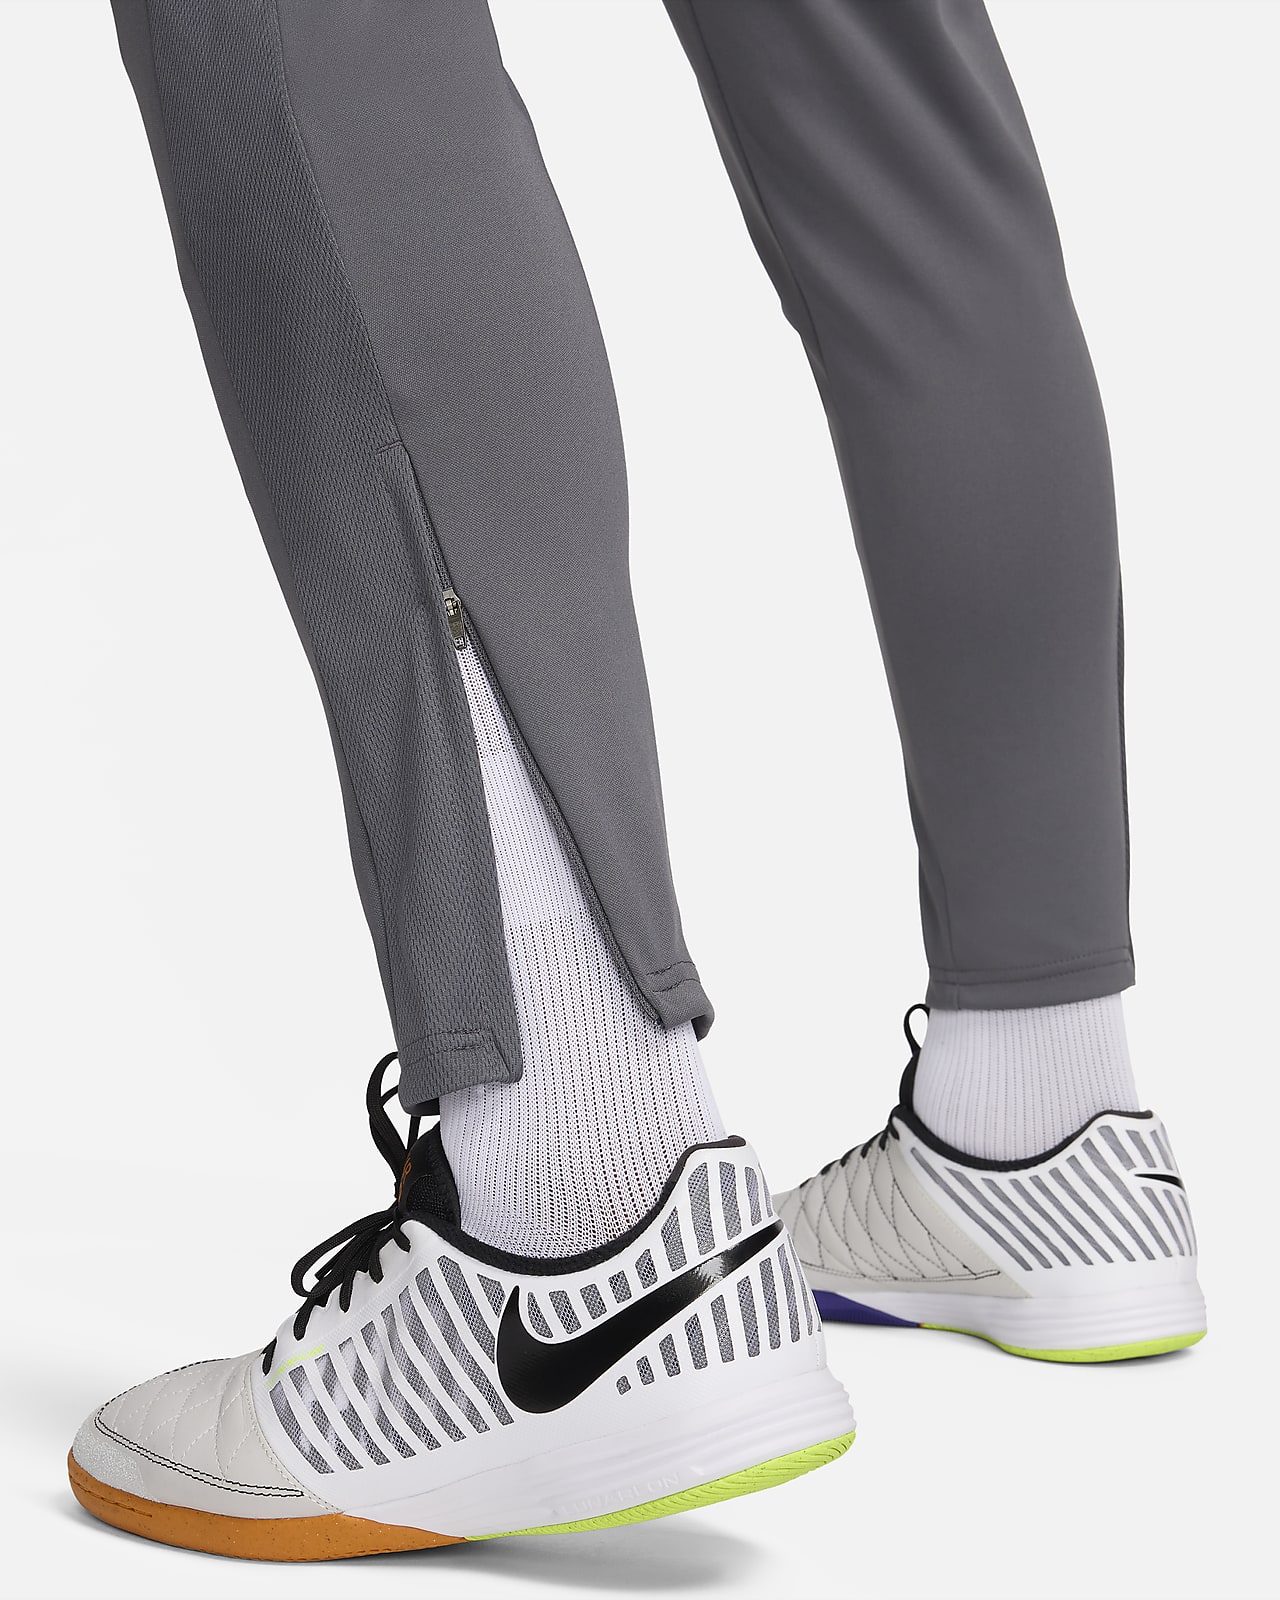  Nike Women's Dri-FIT Academy Soccer Pants (as1, Alpha